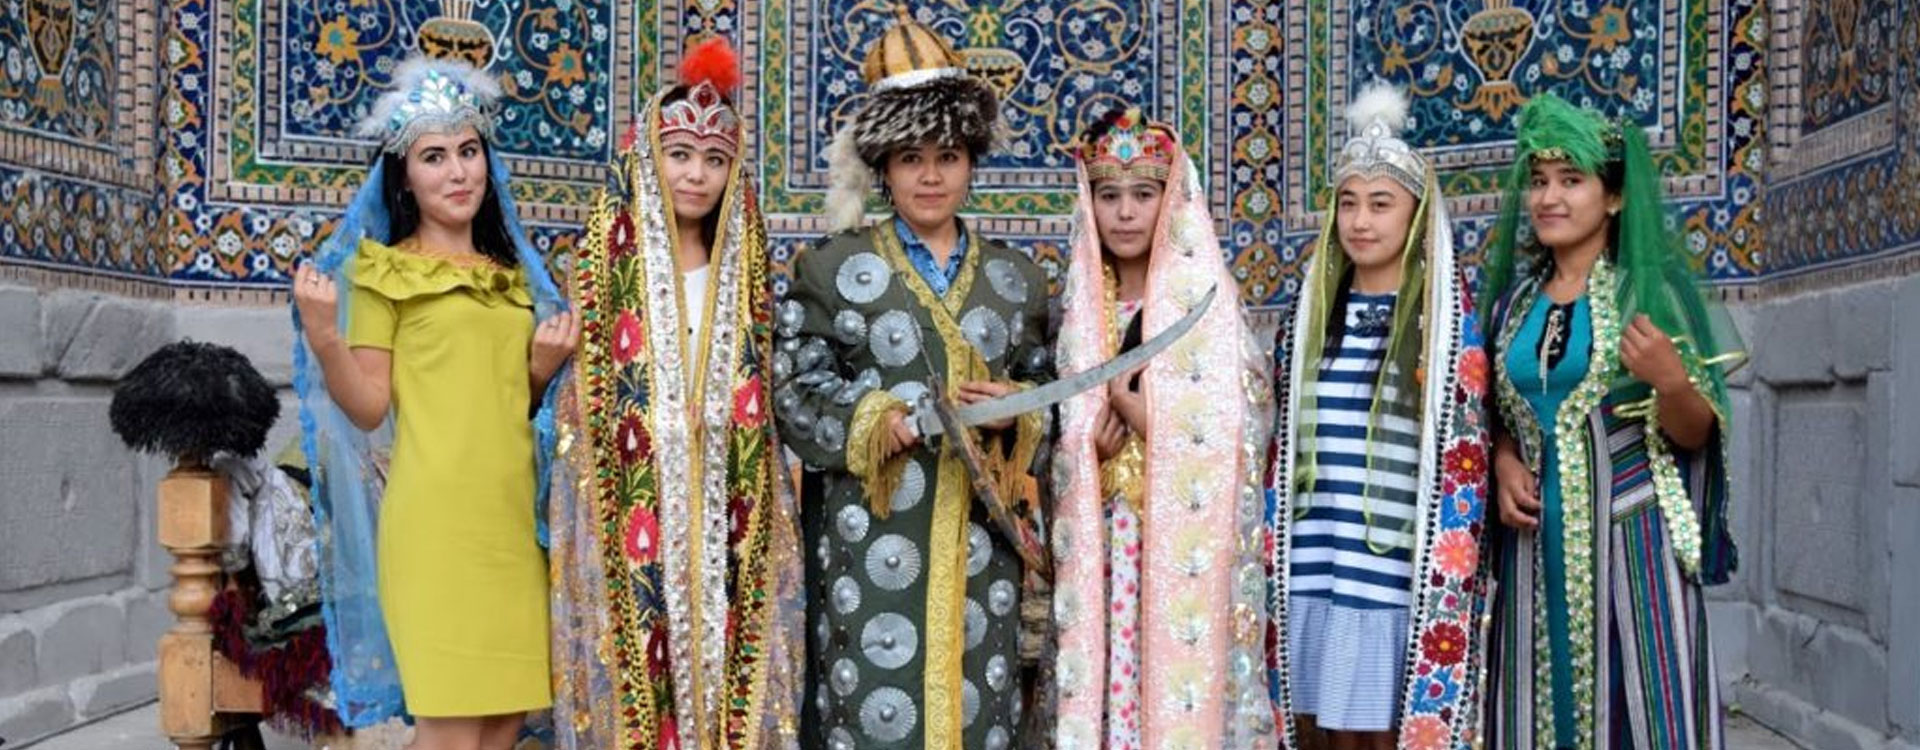 Cultural Tourism In Uzbekistan